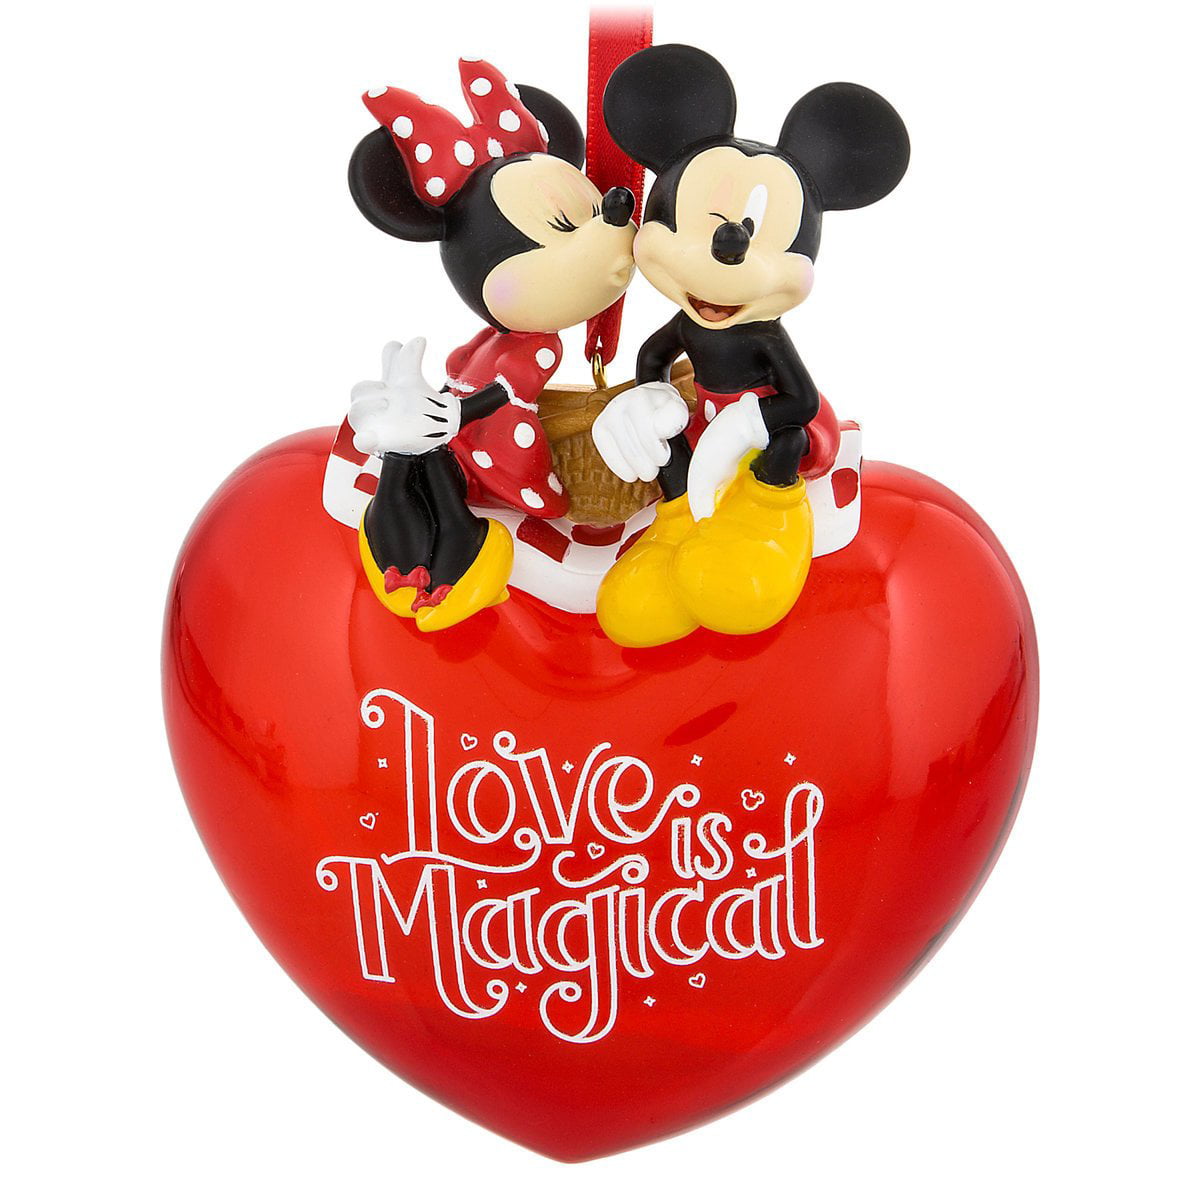 Disney Parks Mickey Mouse Graduate Figural Ornament 